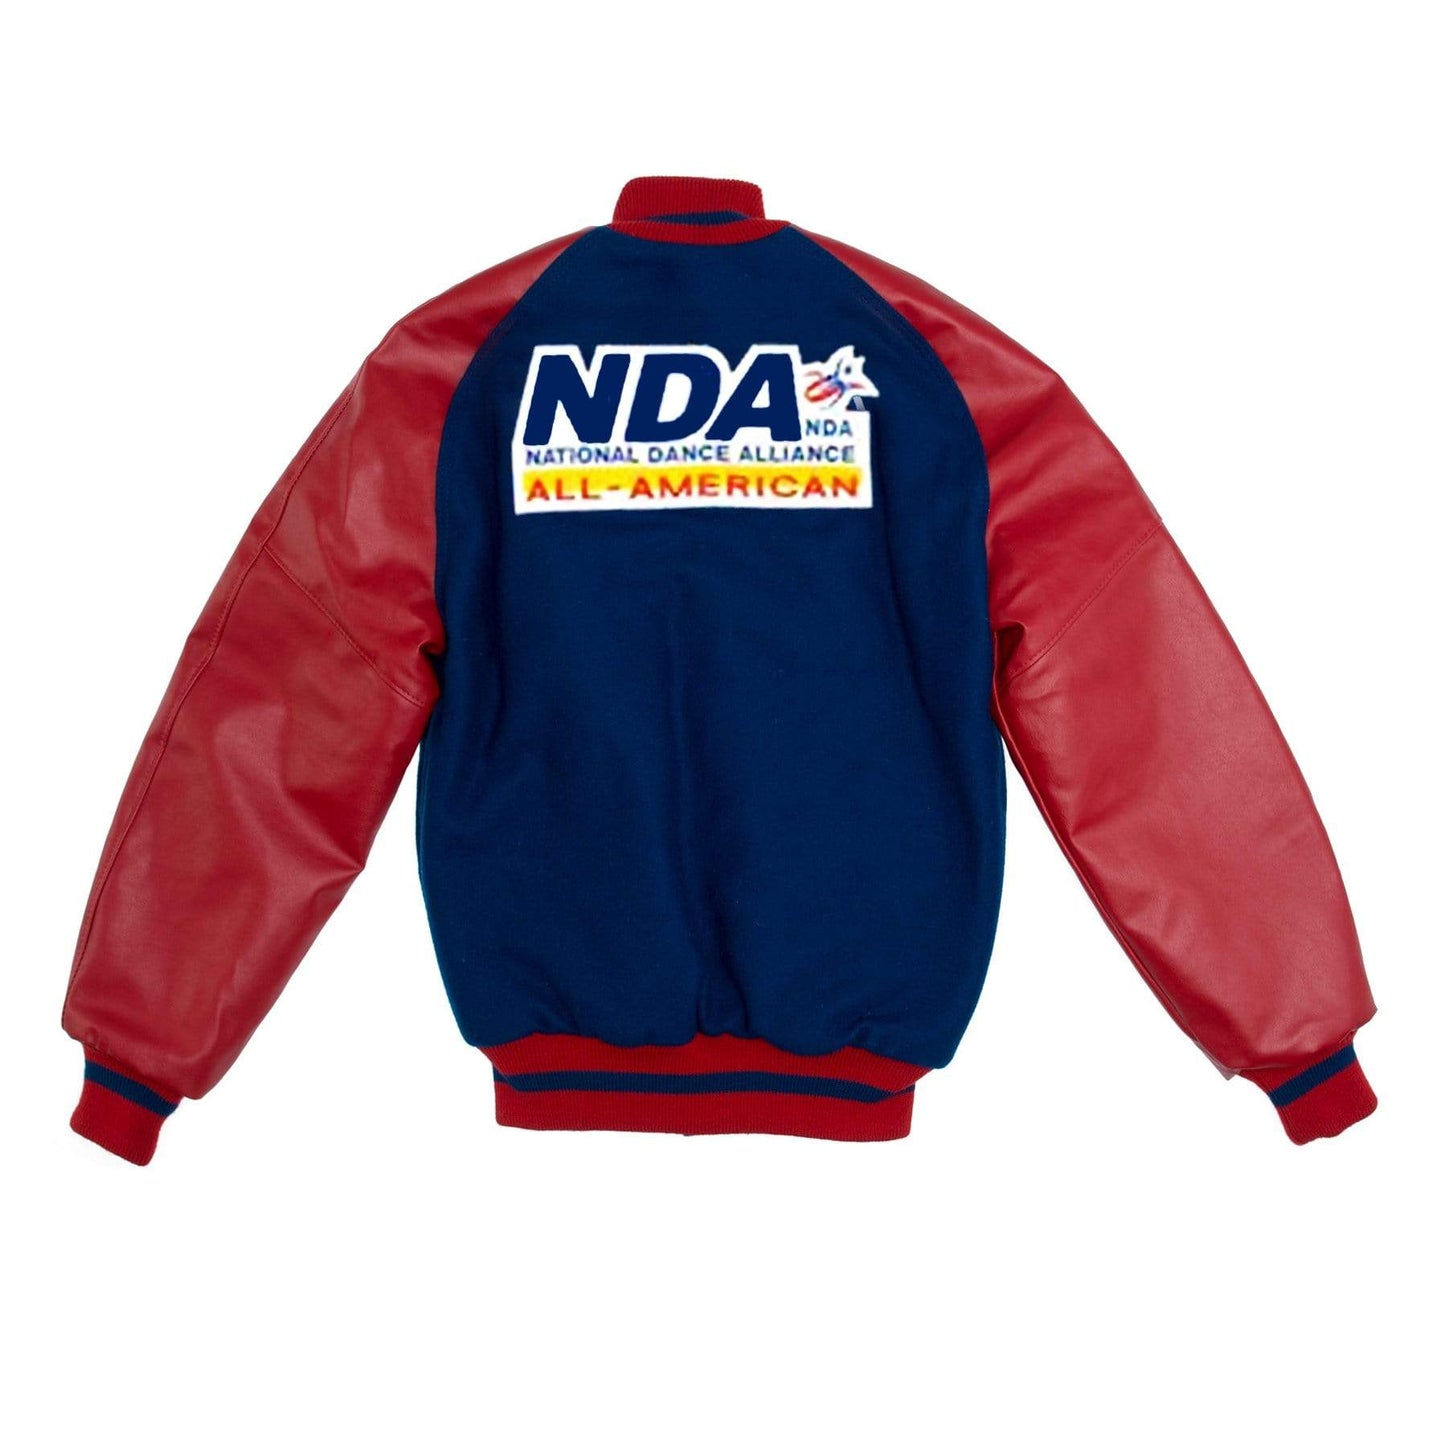 NDA All-American Jacket - Varsity Shop